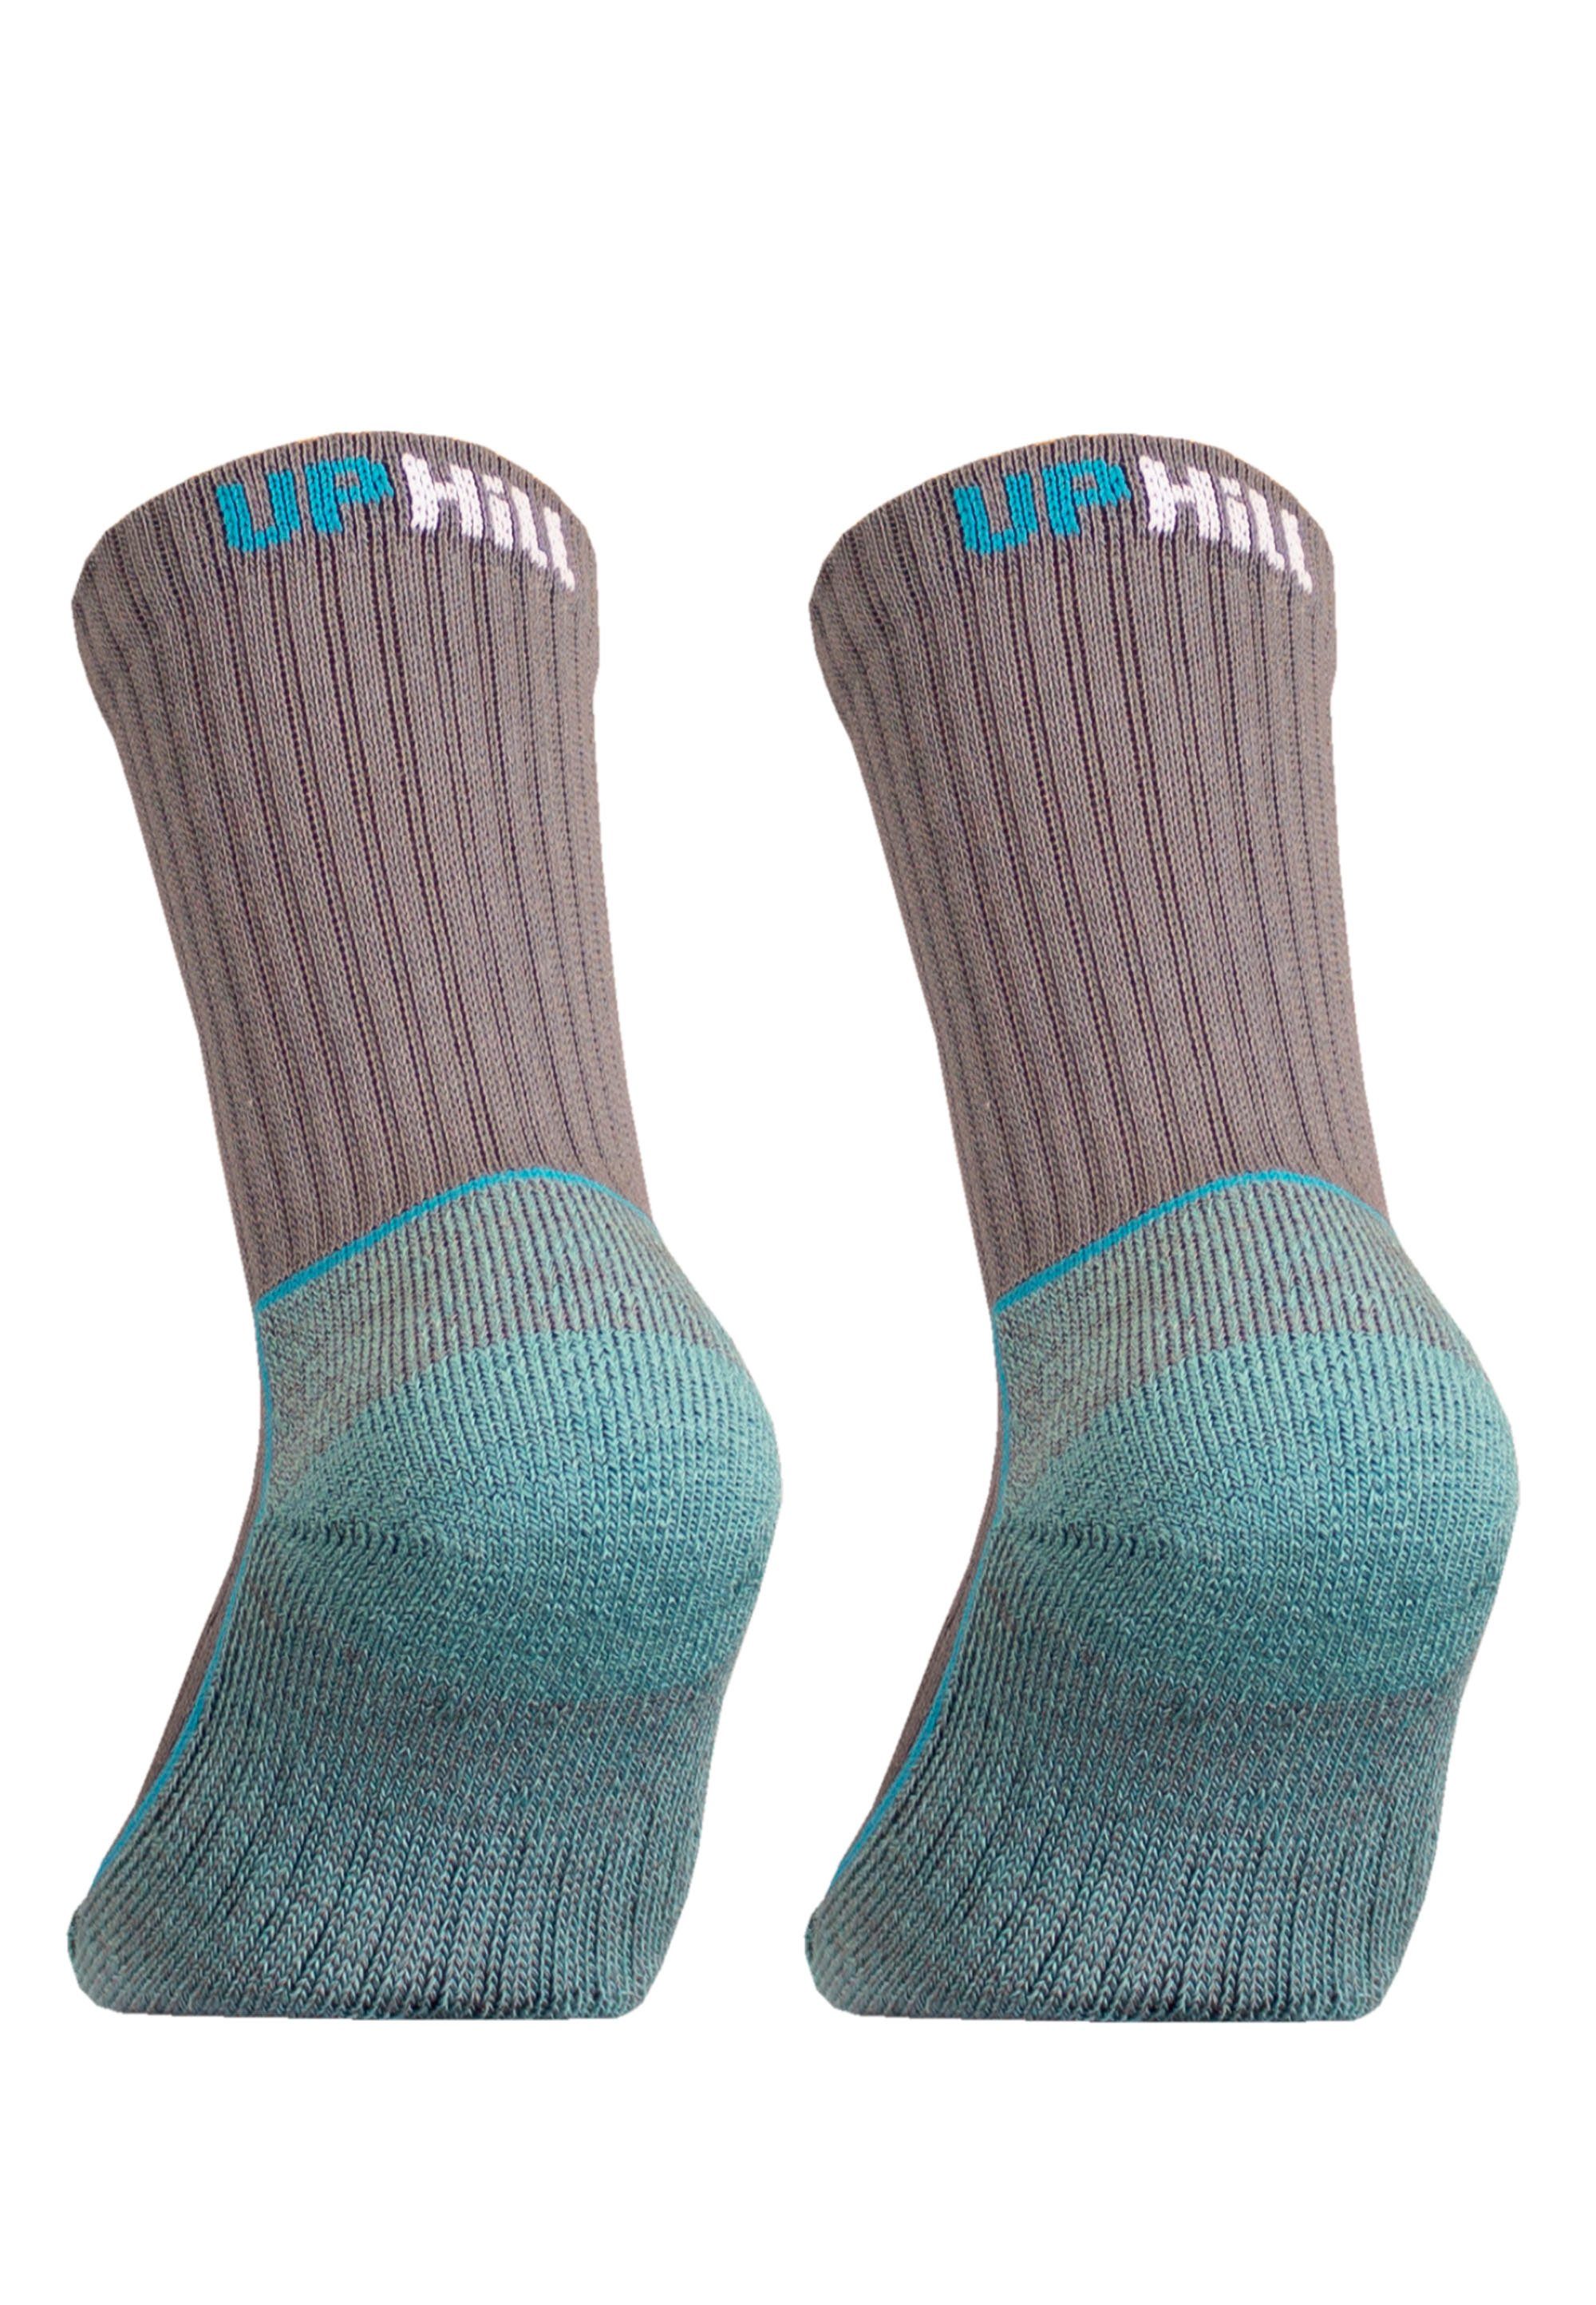 UphillSport Socken SAANA JR grau Pack 2er (2-Paar) mit Flextech-Struktur